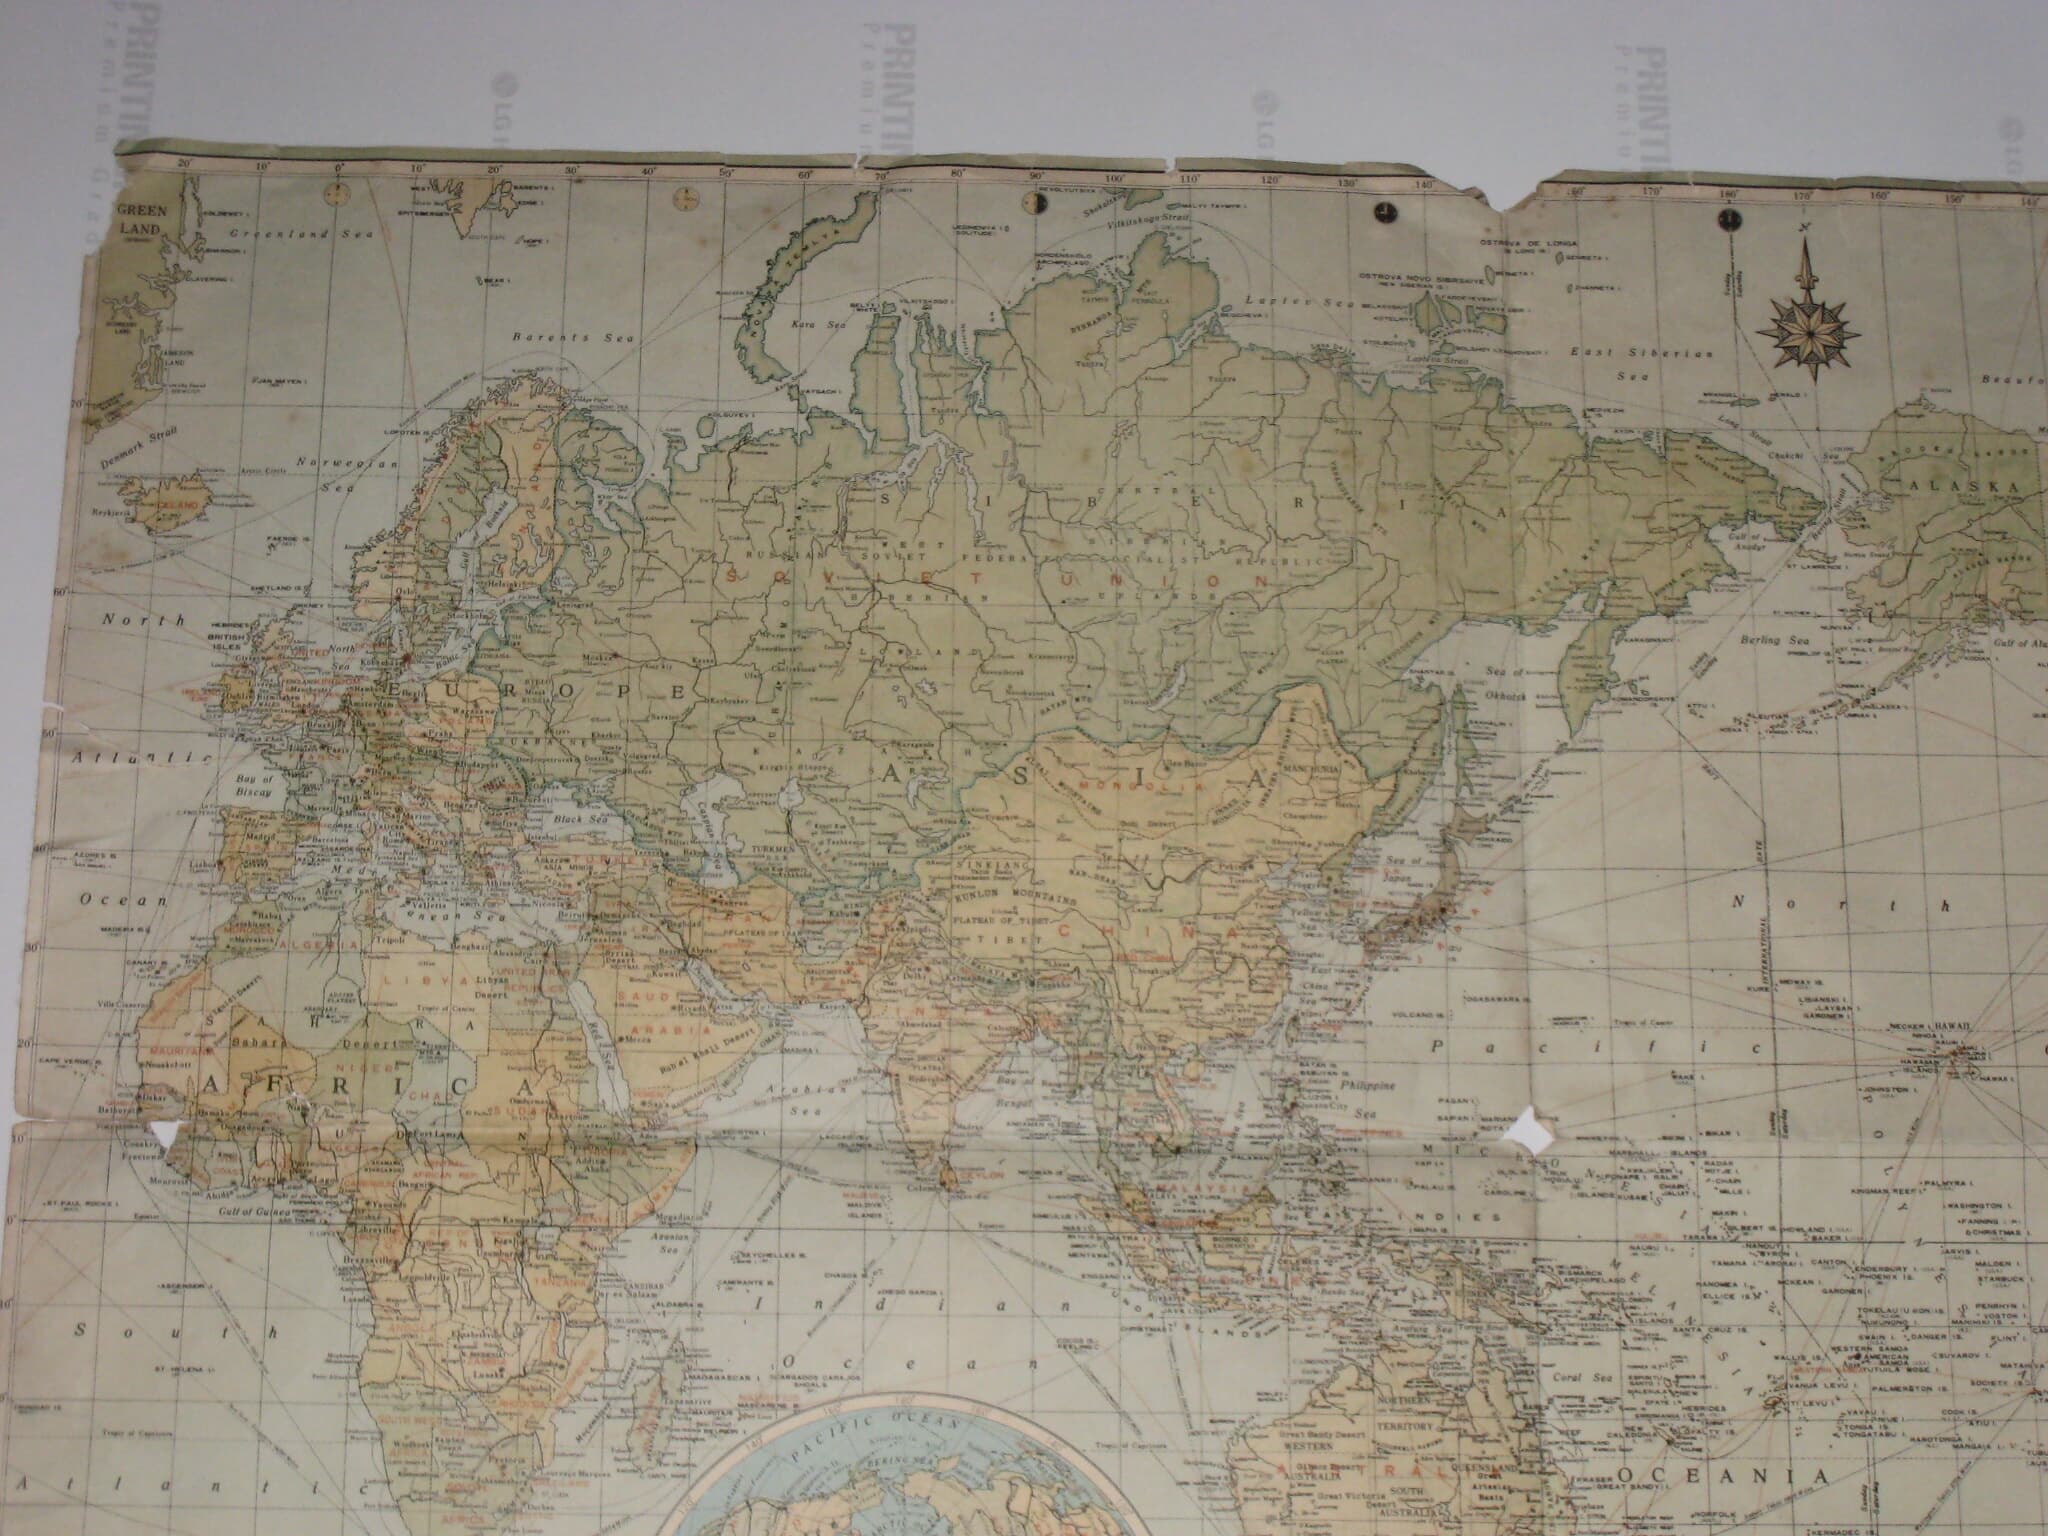 World Map On Mercator,s Projection 메르카토르 투영에 관한 세계지도